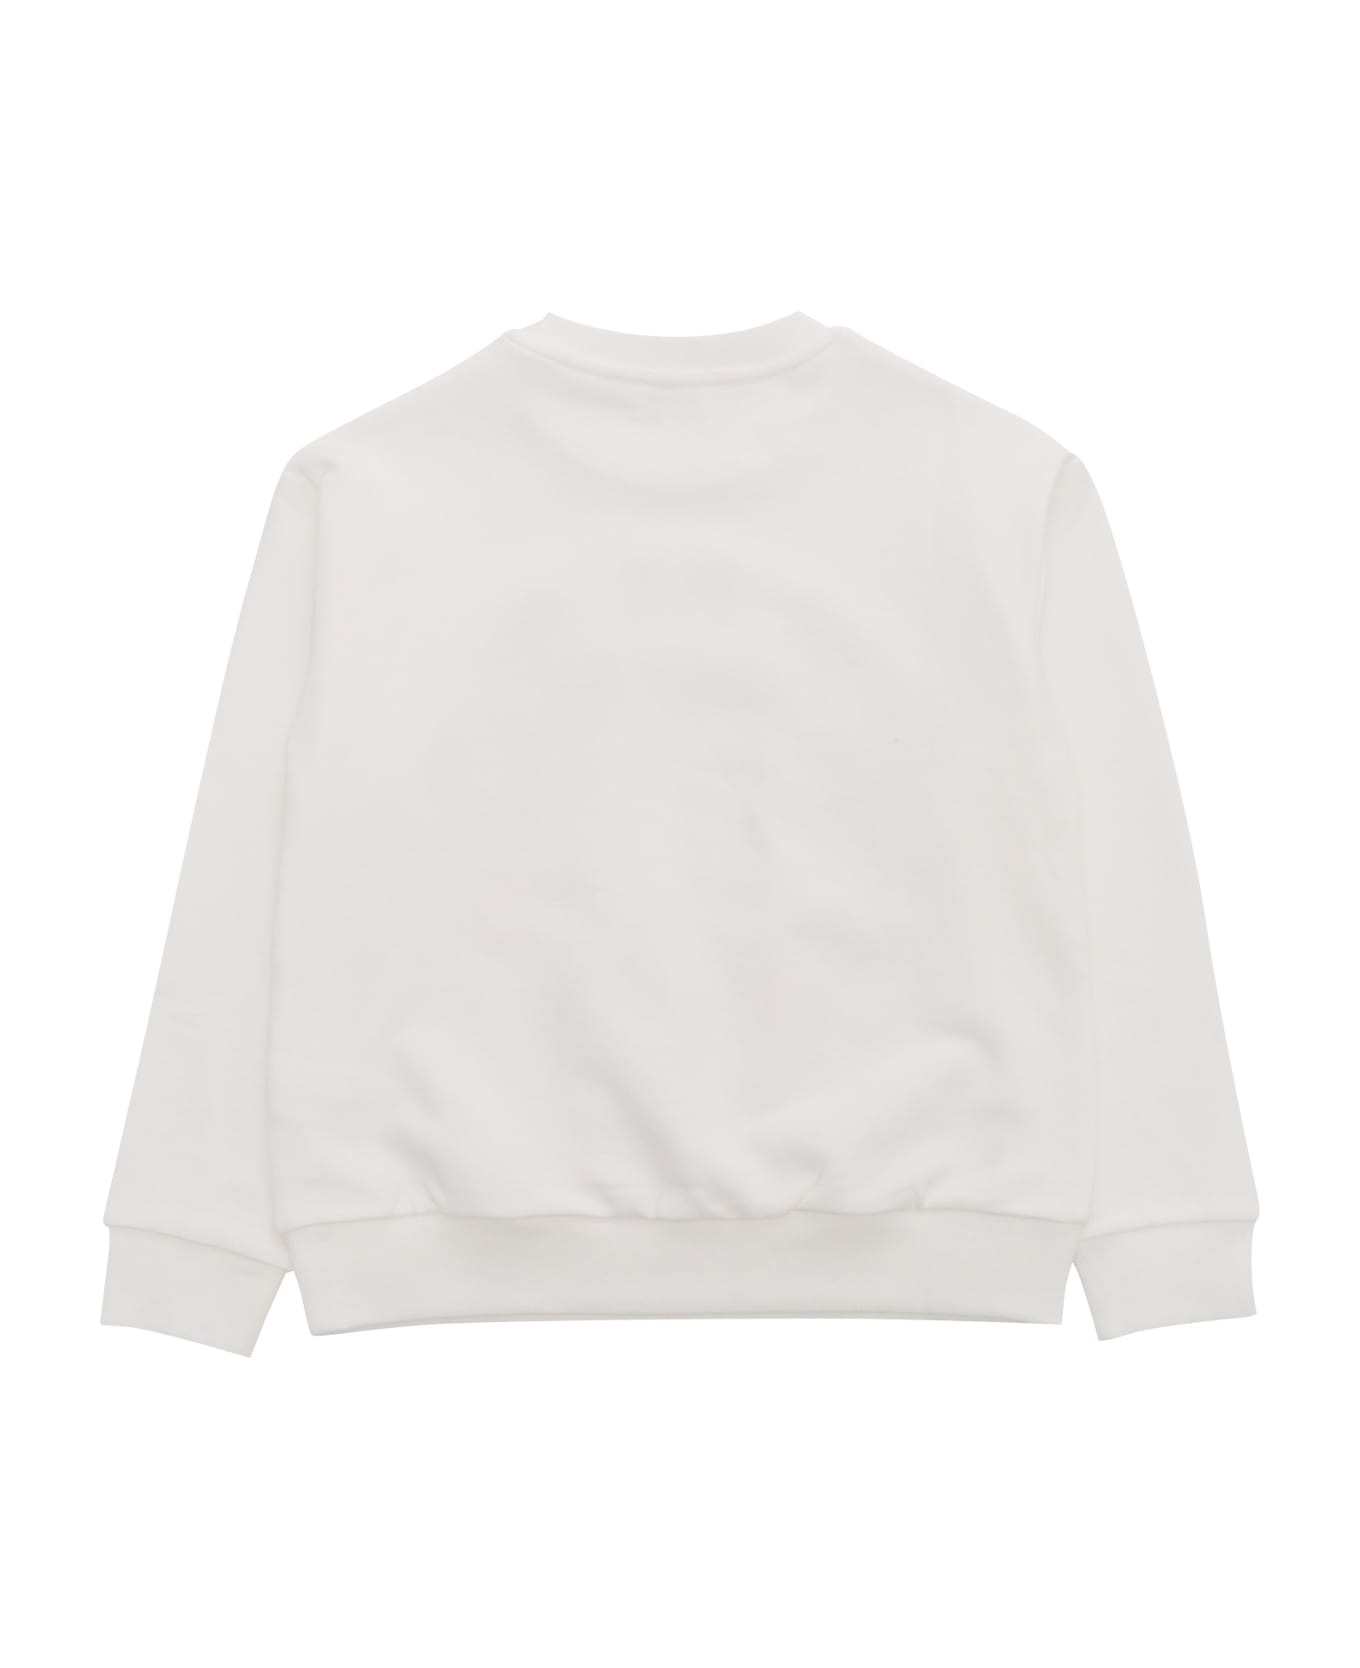 Kenzo Kids White Sweatshirt With Logo - WHITE